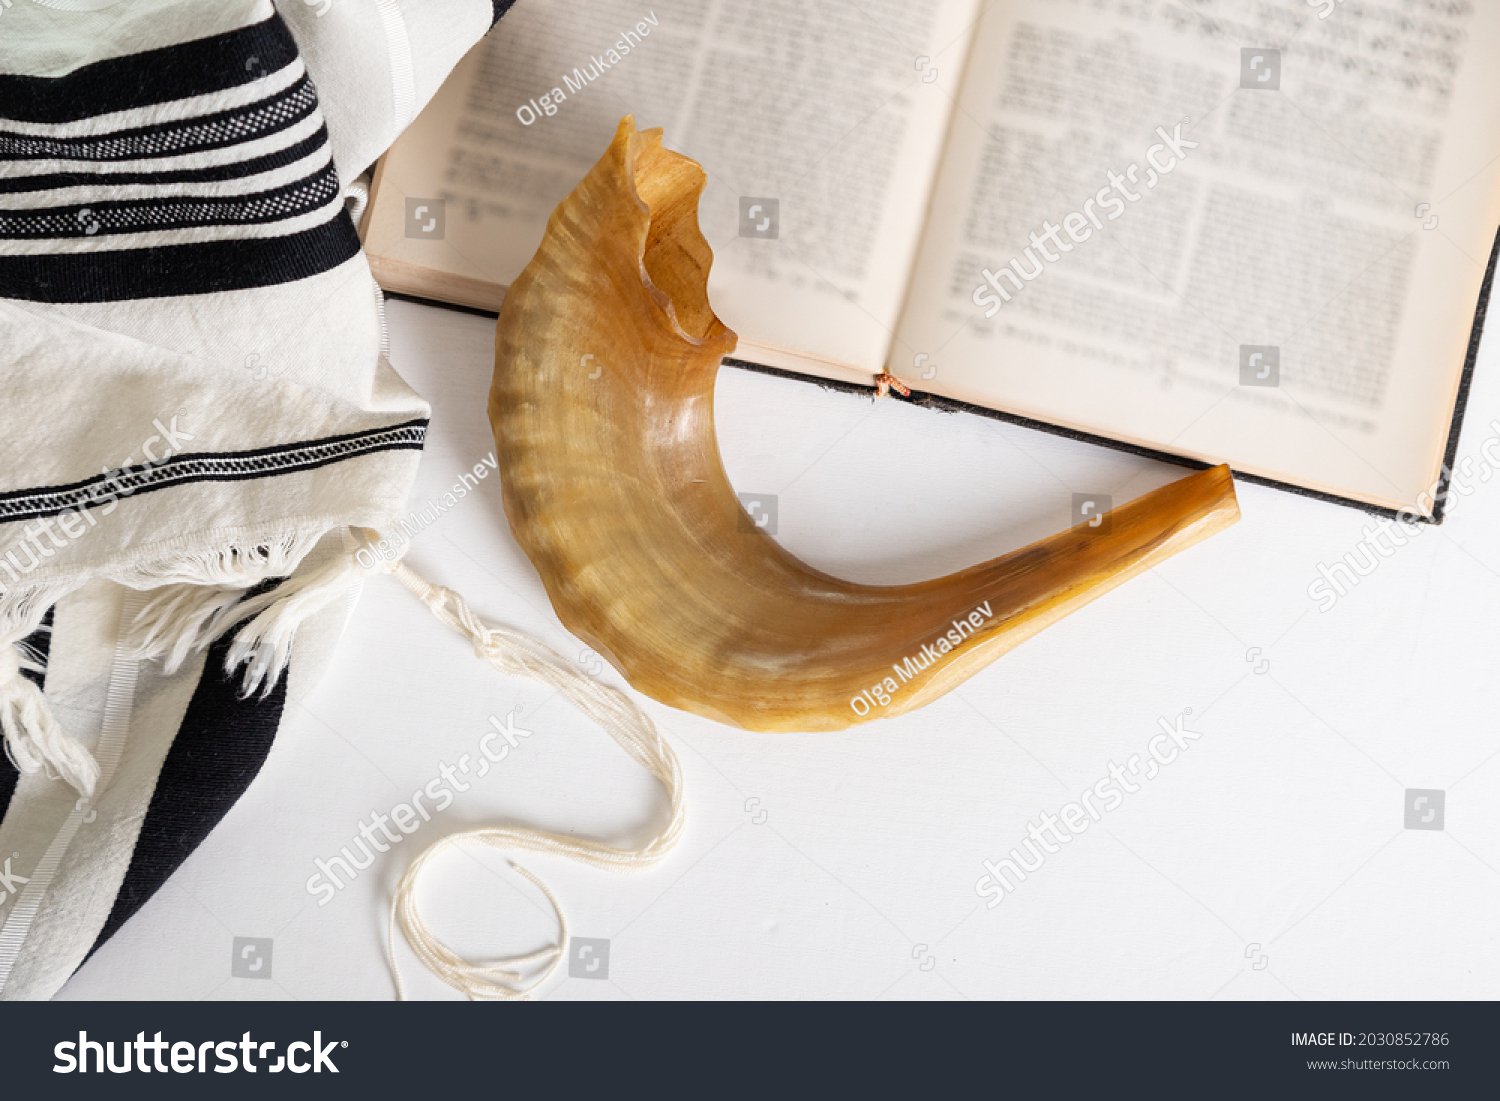 Religion image of Shofar (horn), Tallit (Prayer Shawl)  and Prayer book religious symbols. Rosh hashanah (jewish New Year holiday), Shabbat and Yom kippur concept. #2030852786